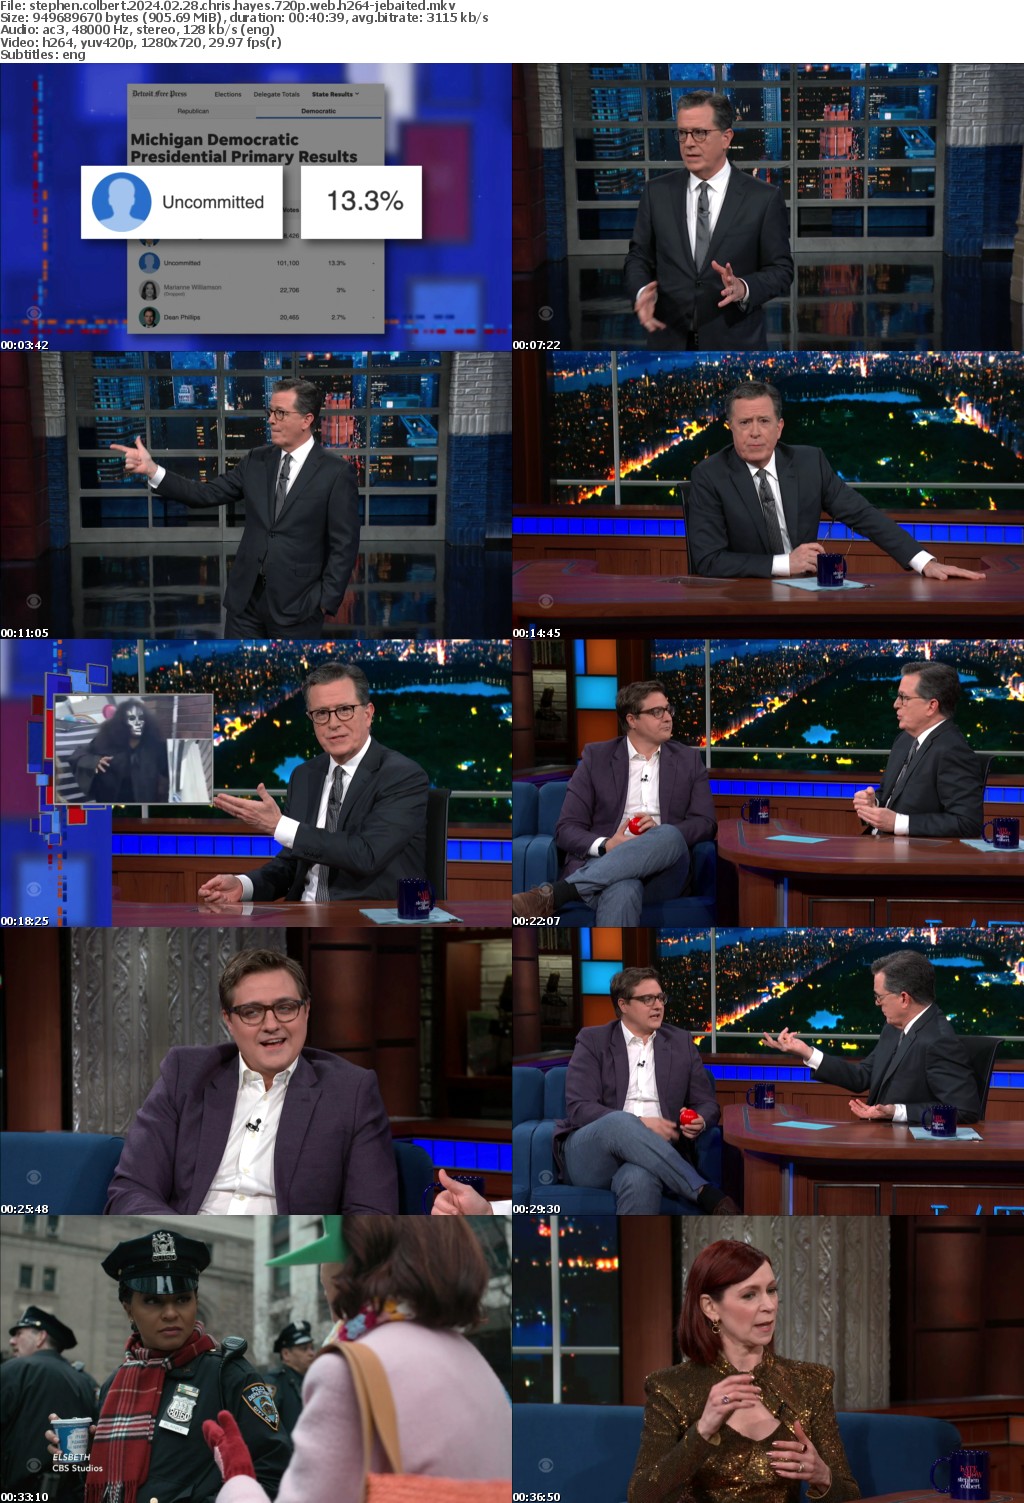 Stephen Colbert 2024 02 28 Chris Hayes 720p WEB H264-JEBAITED